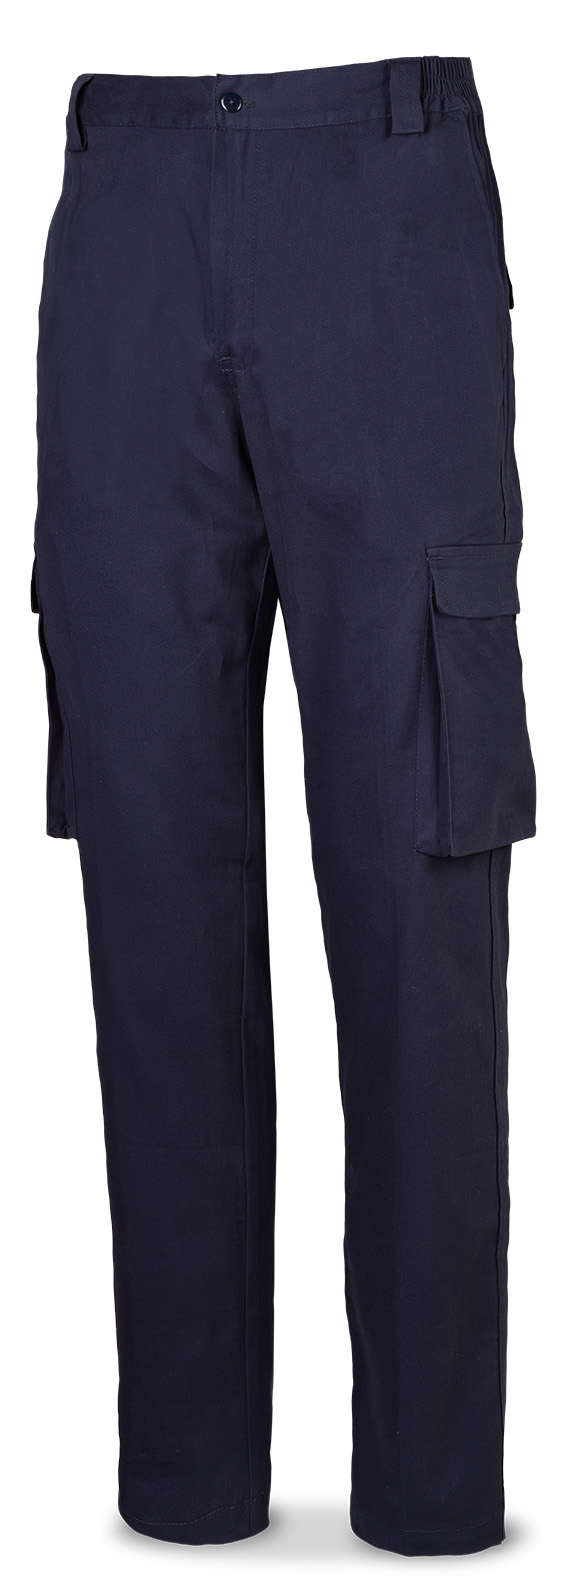 588-PBSA Vestuario Laboral Serie Casual Pantalón STRETCH básico. Color azul.